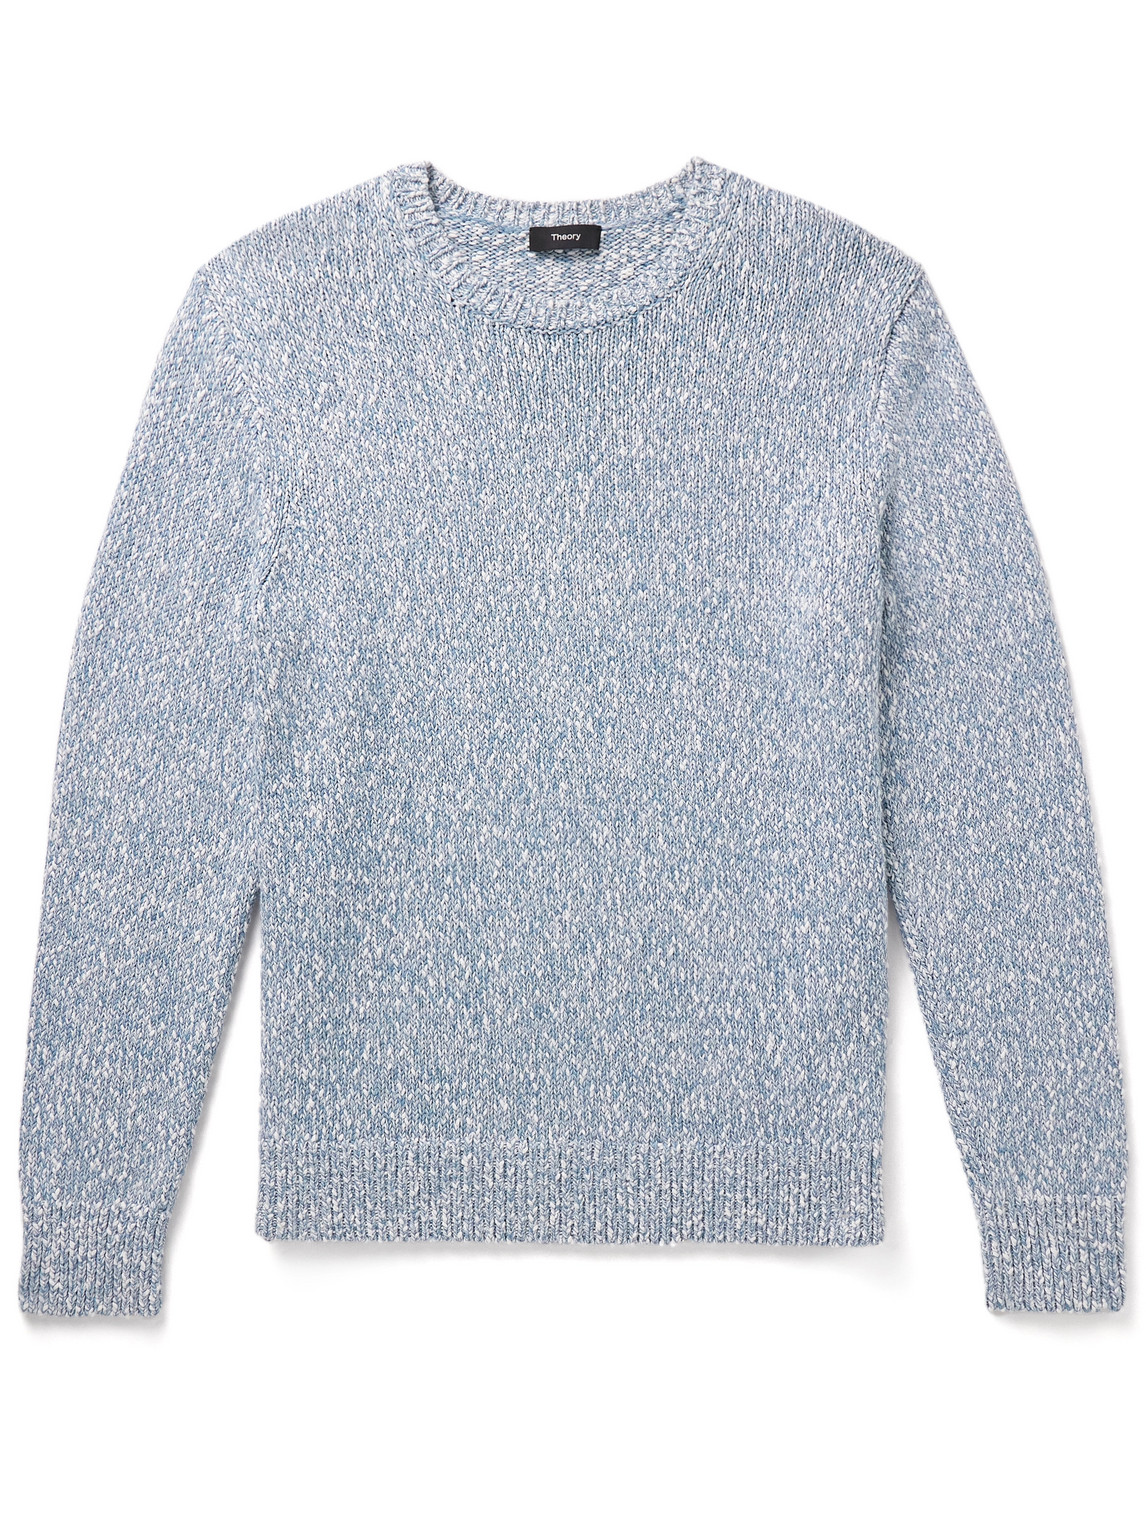 Theory - Mauno Cotton Sweater - Men - Blue - XS von Theory